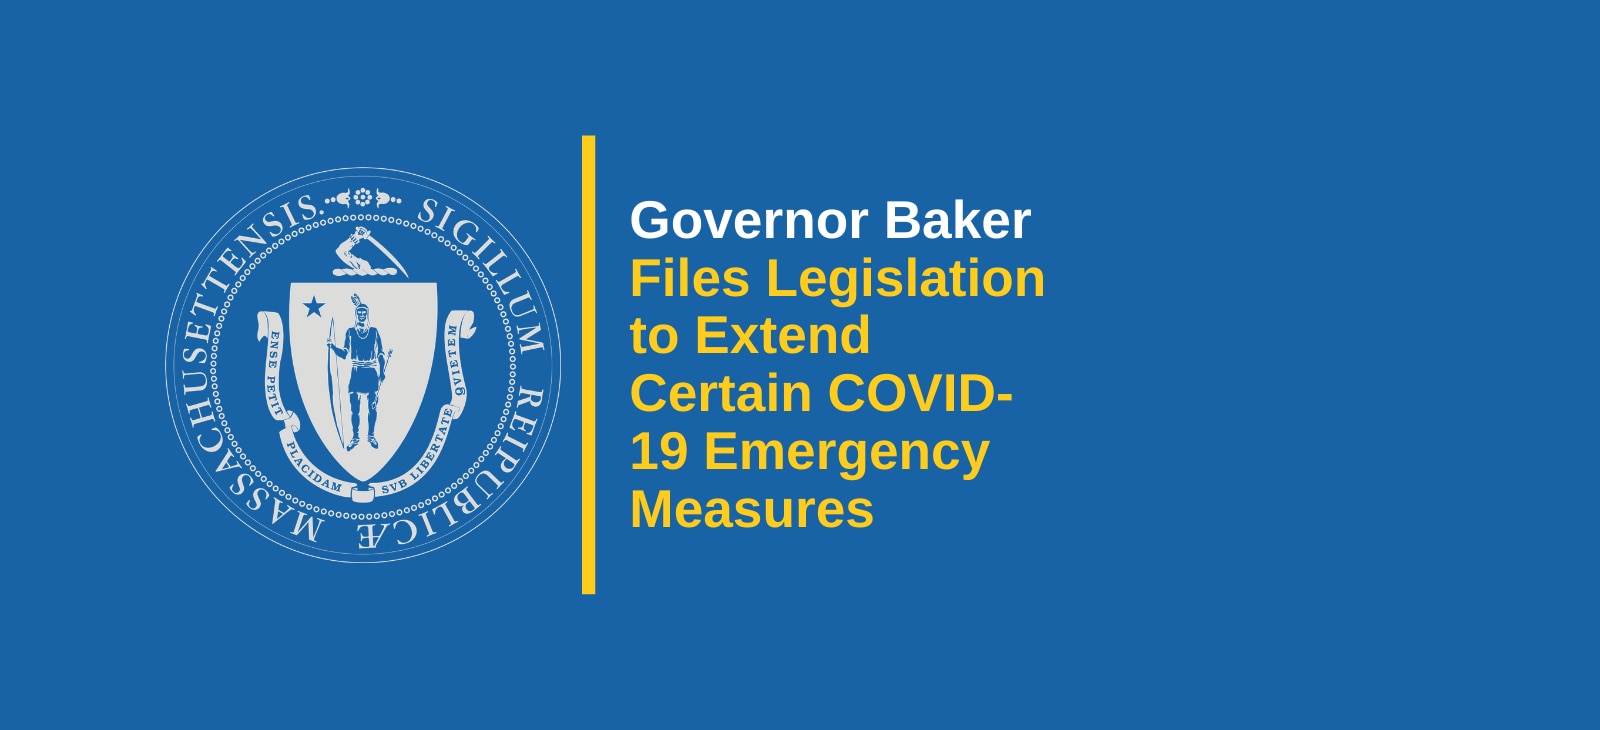 Governor Baker Files Legislation to Extend Certain COVID-19 Emergency Measures​